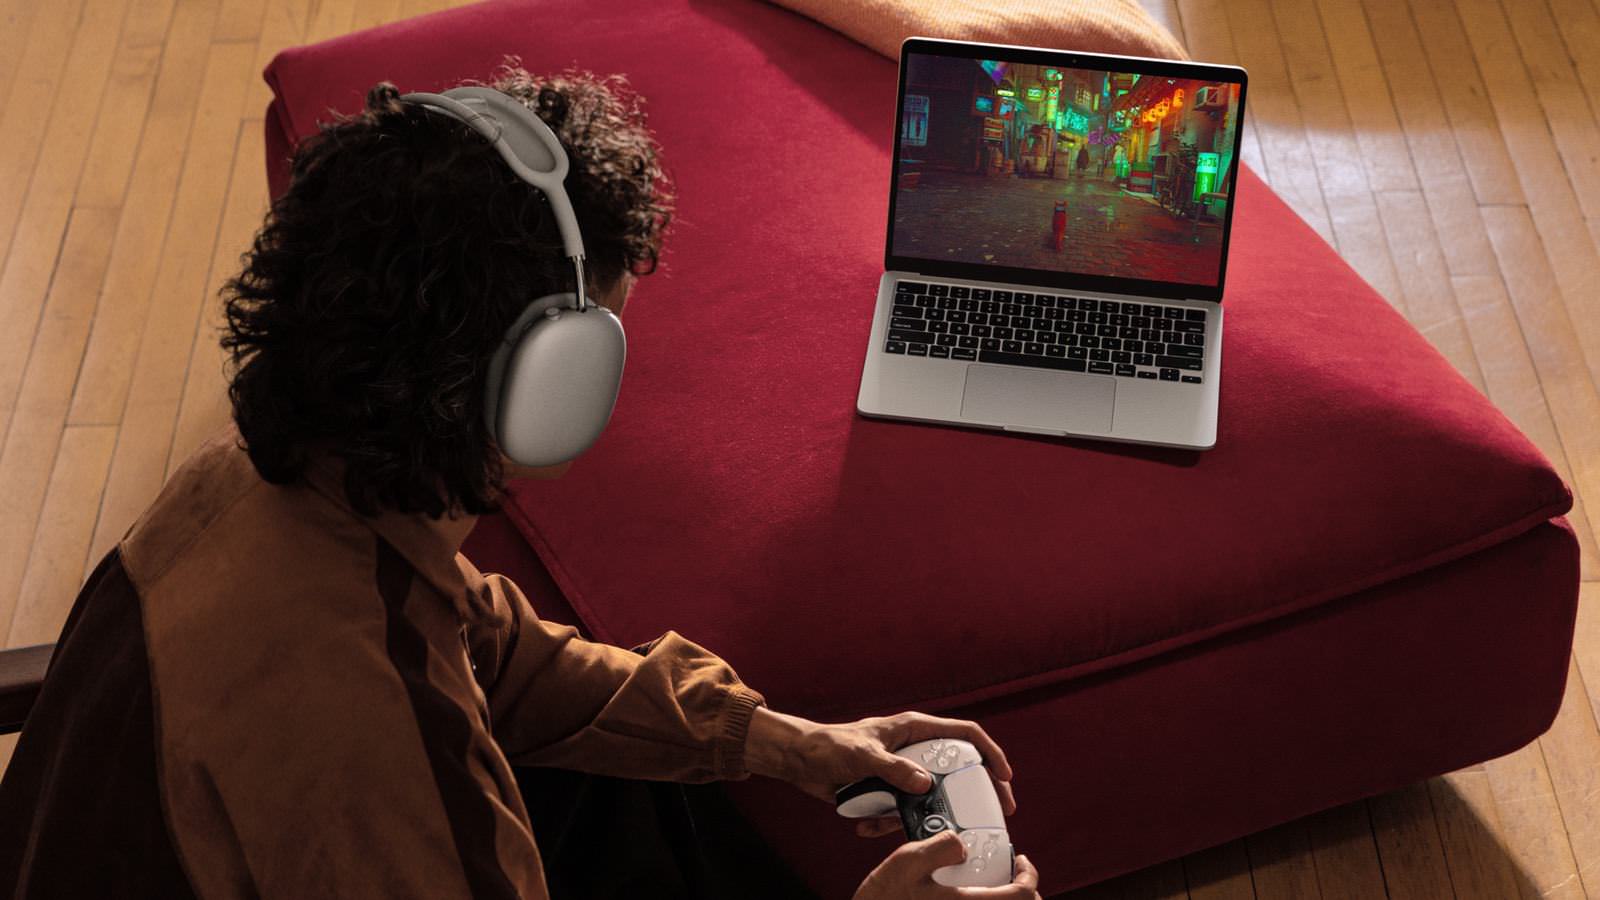 Apple MacBook Air lifestyle gaming 240304